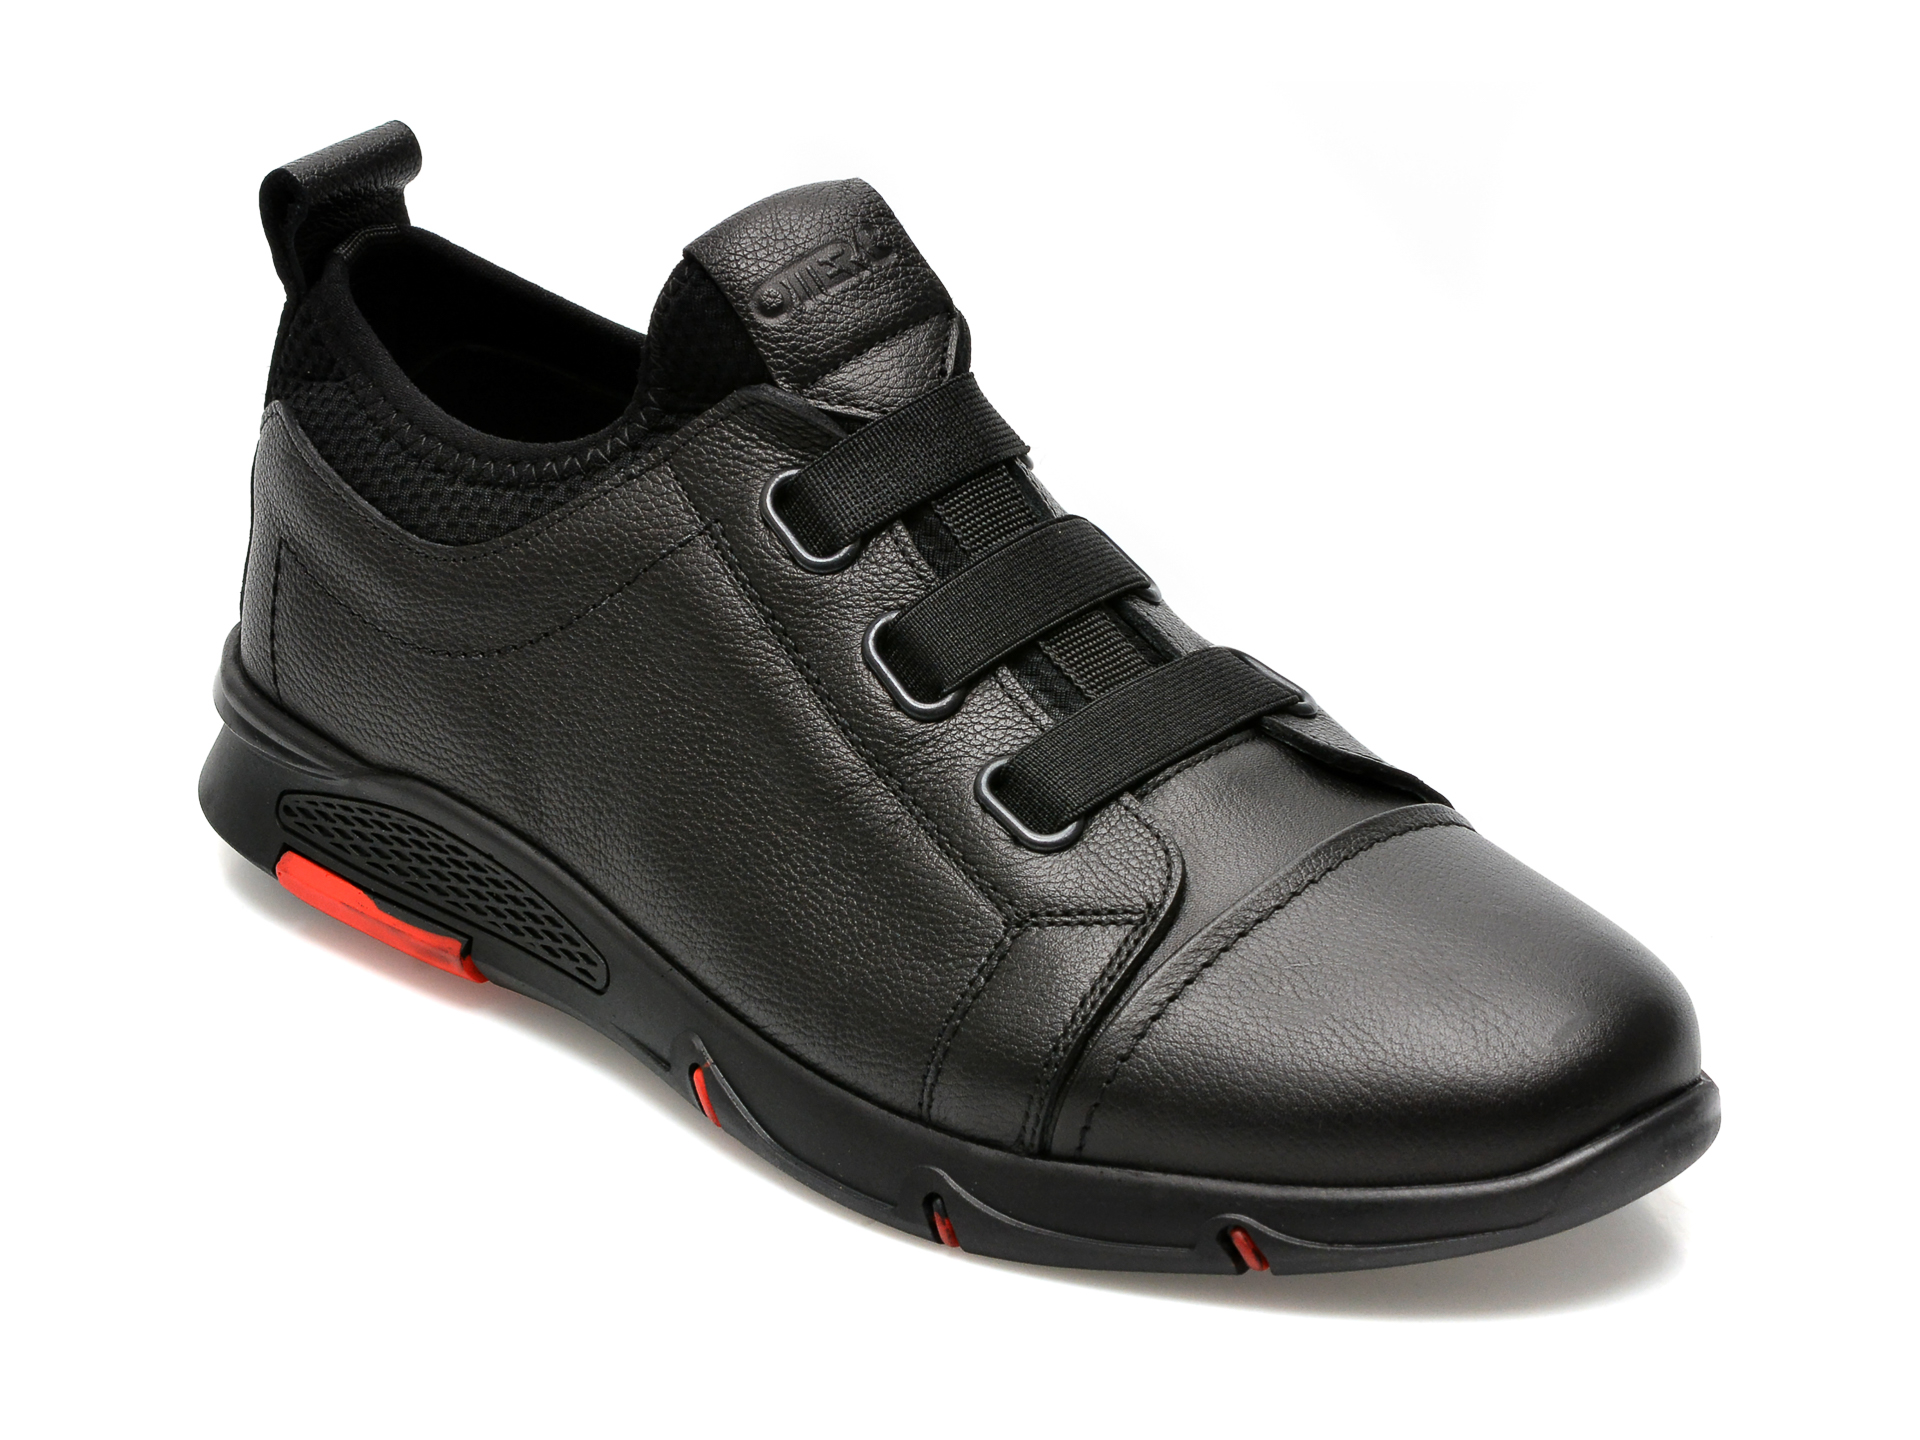 Pantofi OTTER negri, CASP8, din piele naturala